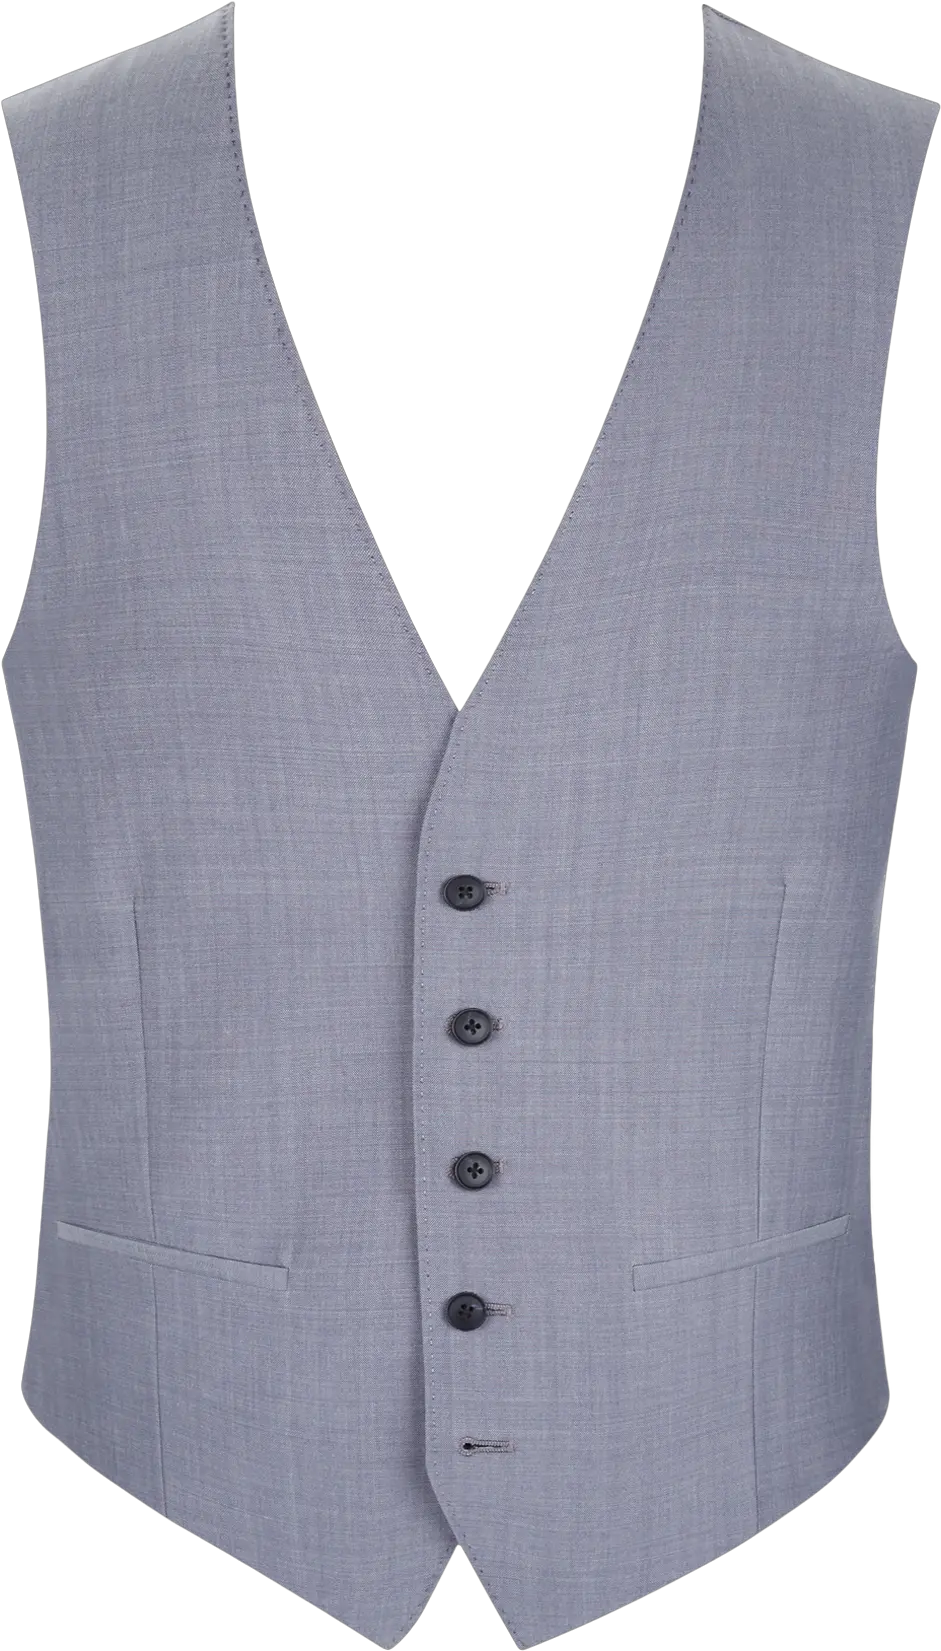 Download Sweater Vest Png Image With No Sweater Vest Transparent Background Vest Png